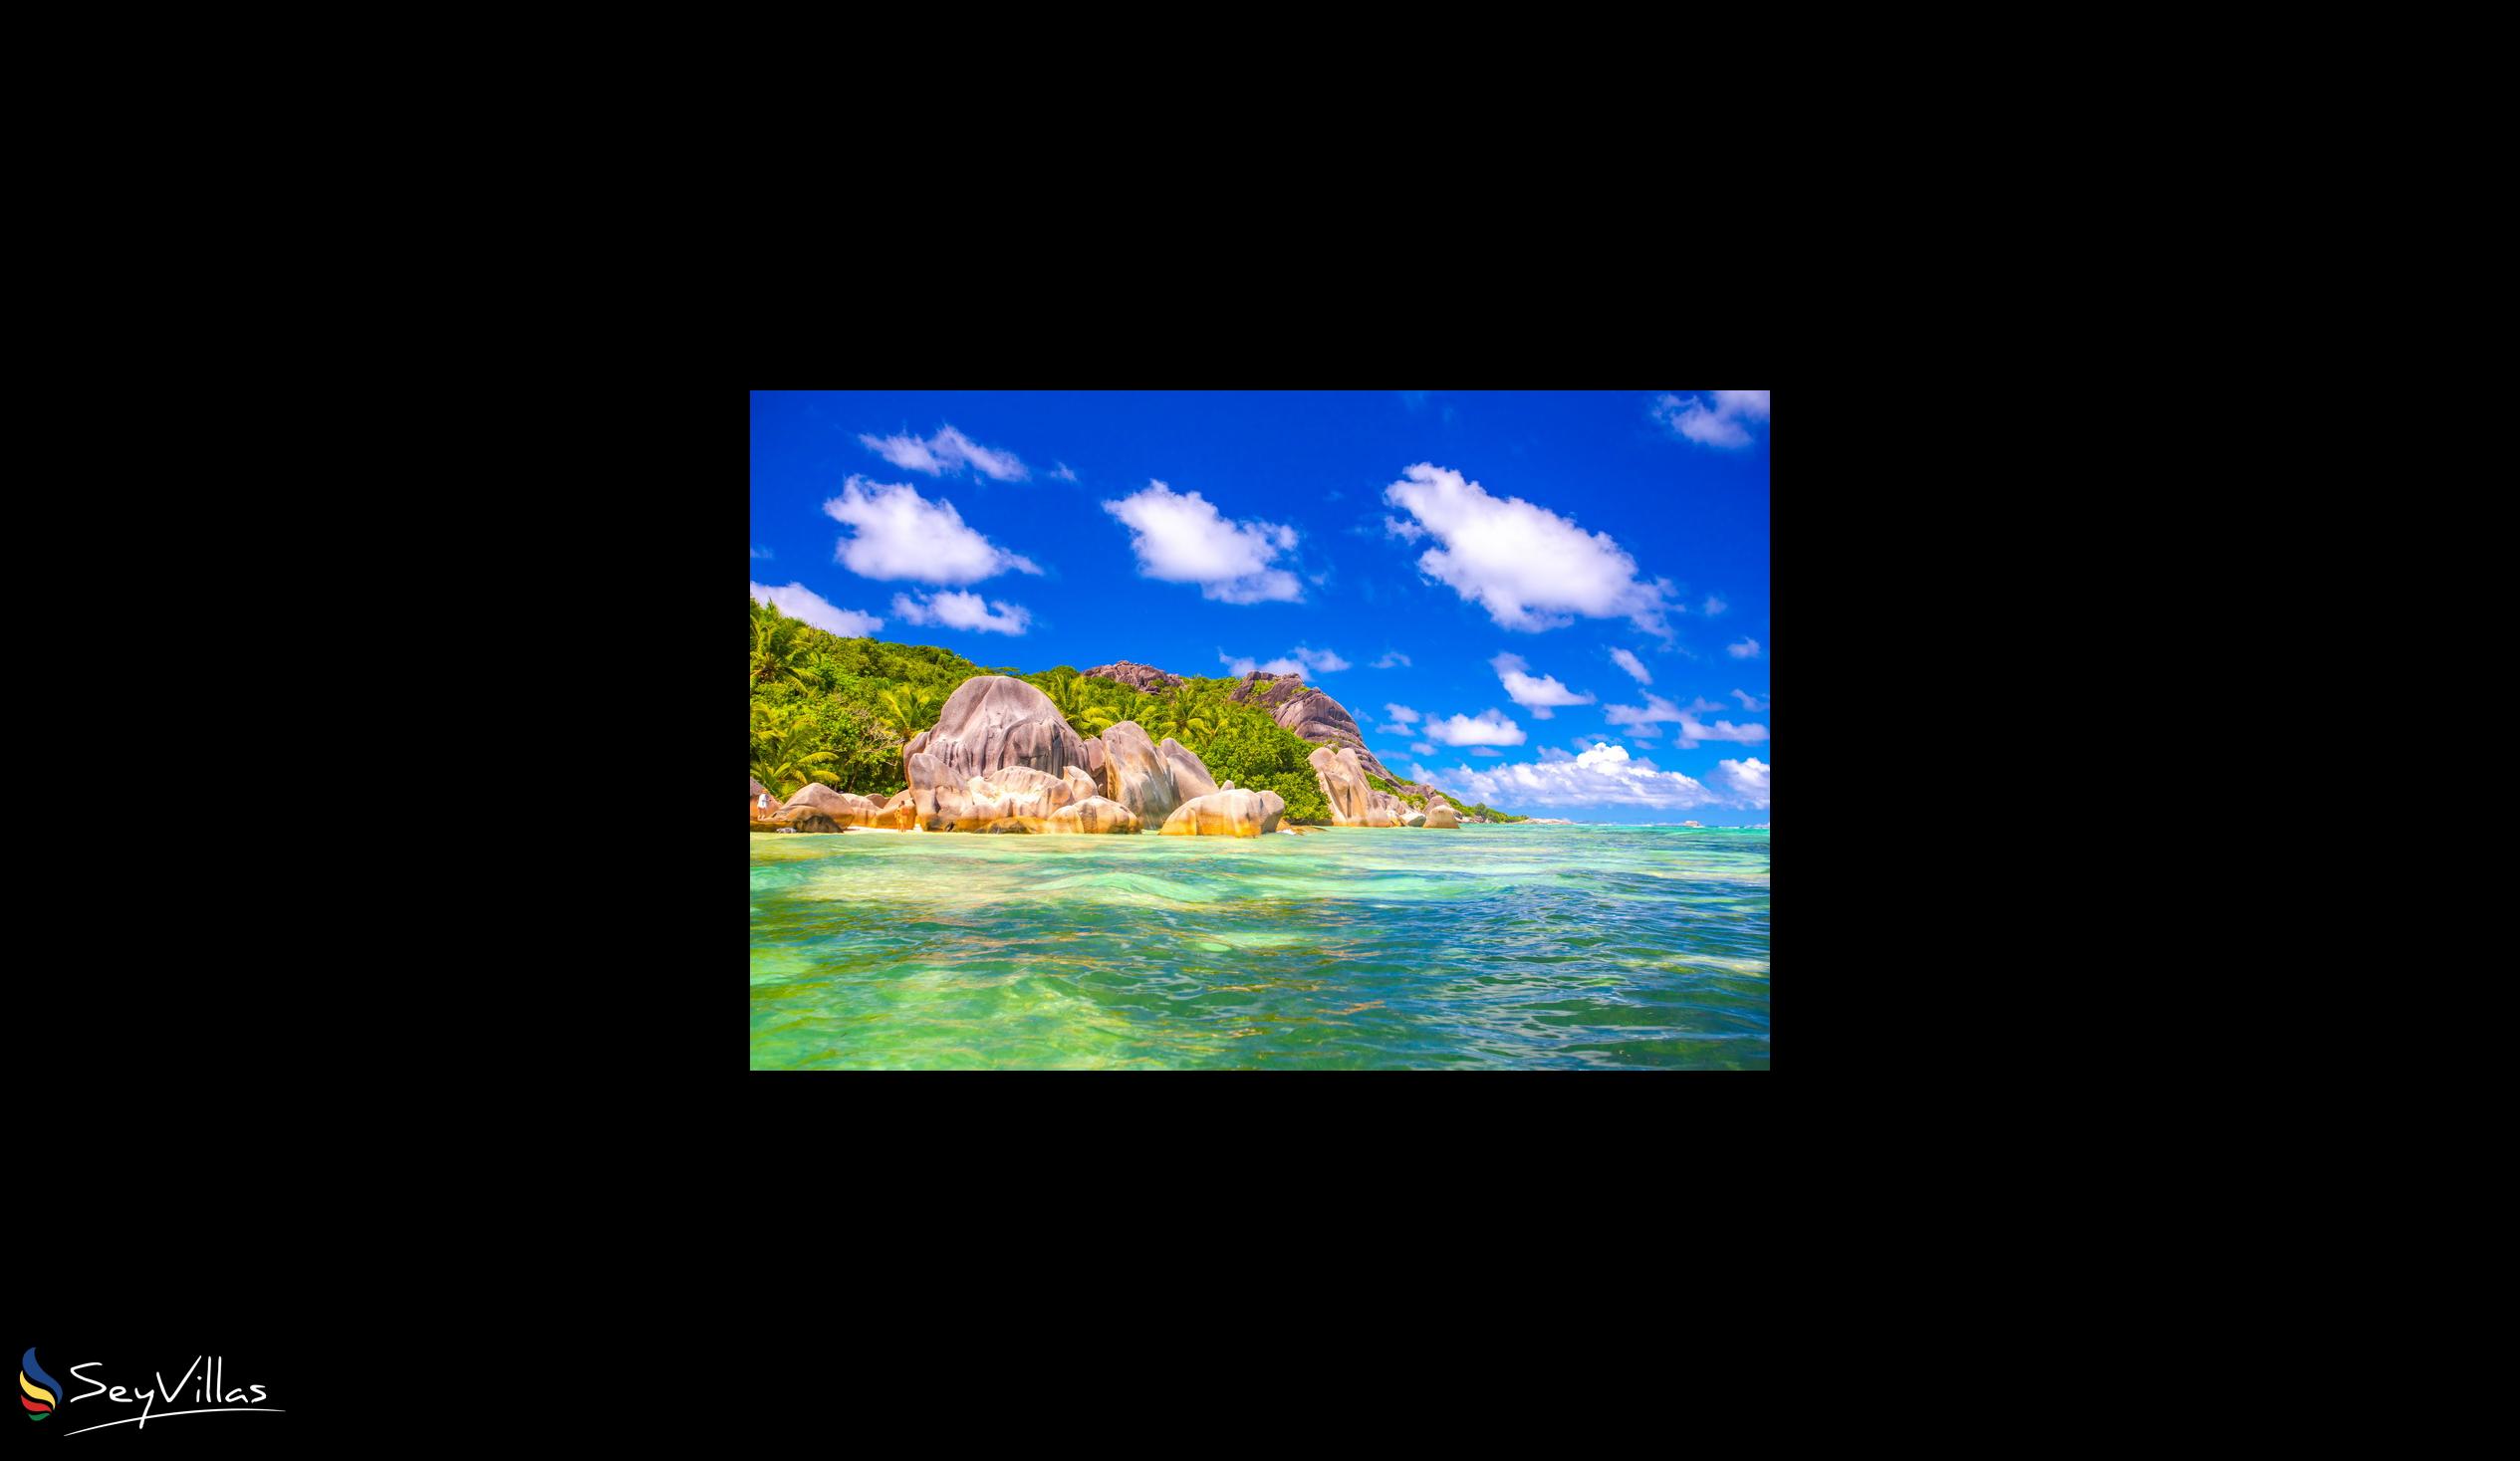 Photo 27: Ambiance Villa - Location - La Digue (Seychelles)